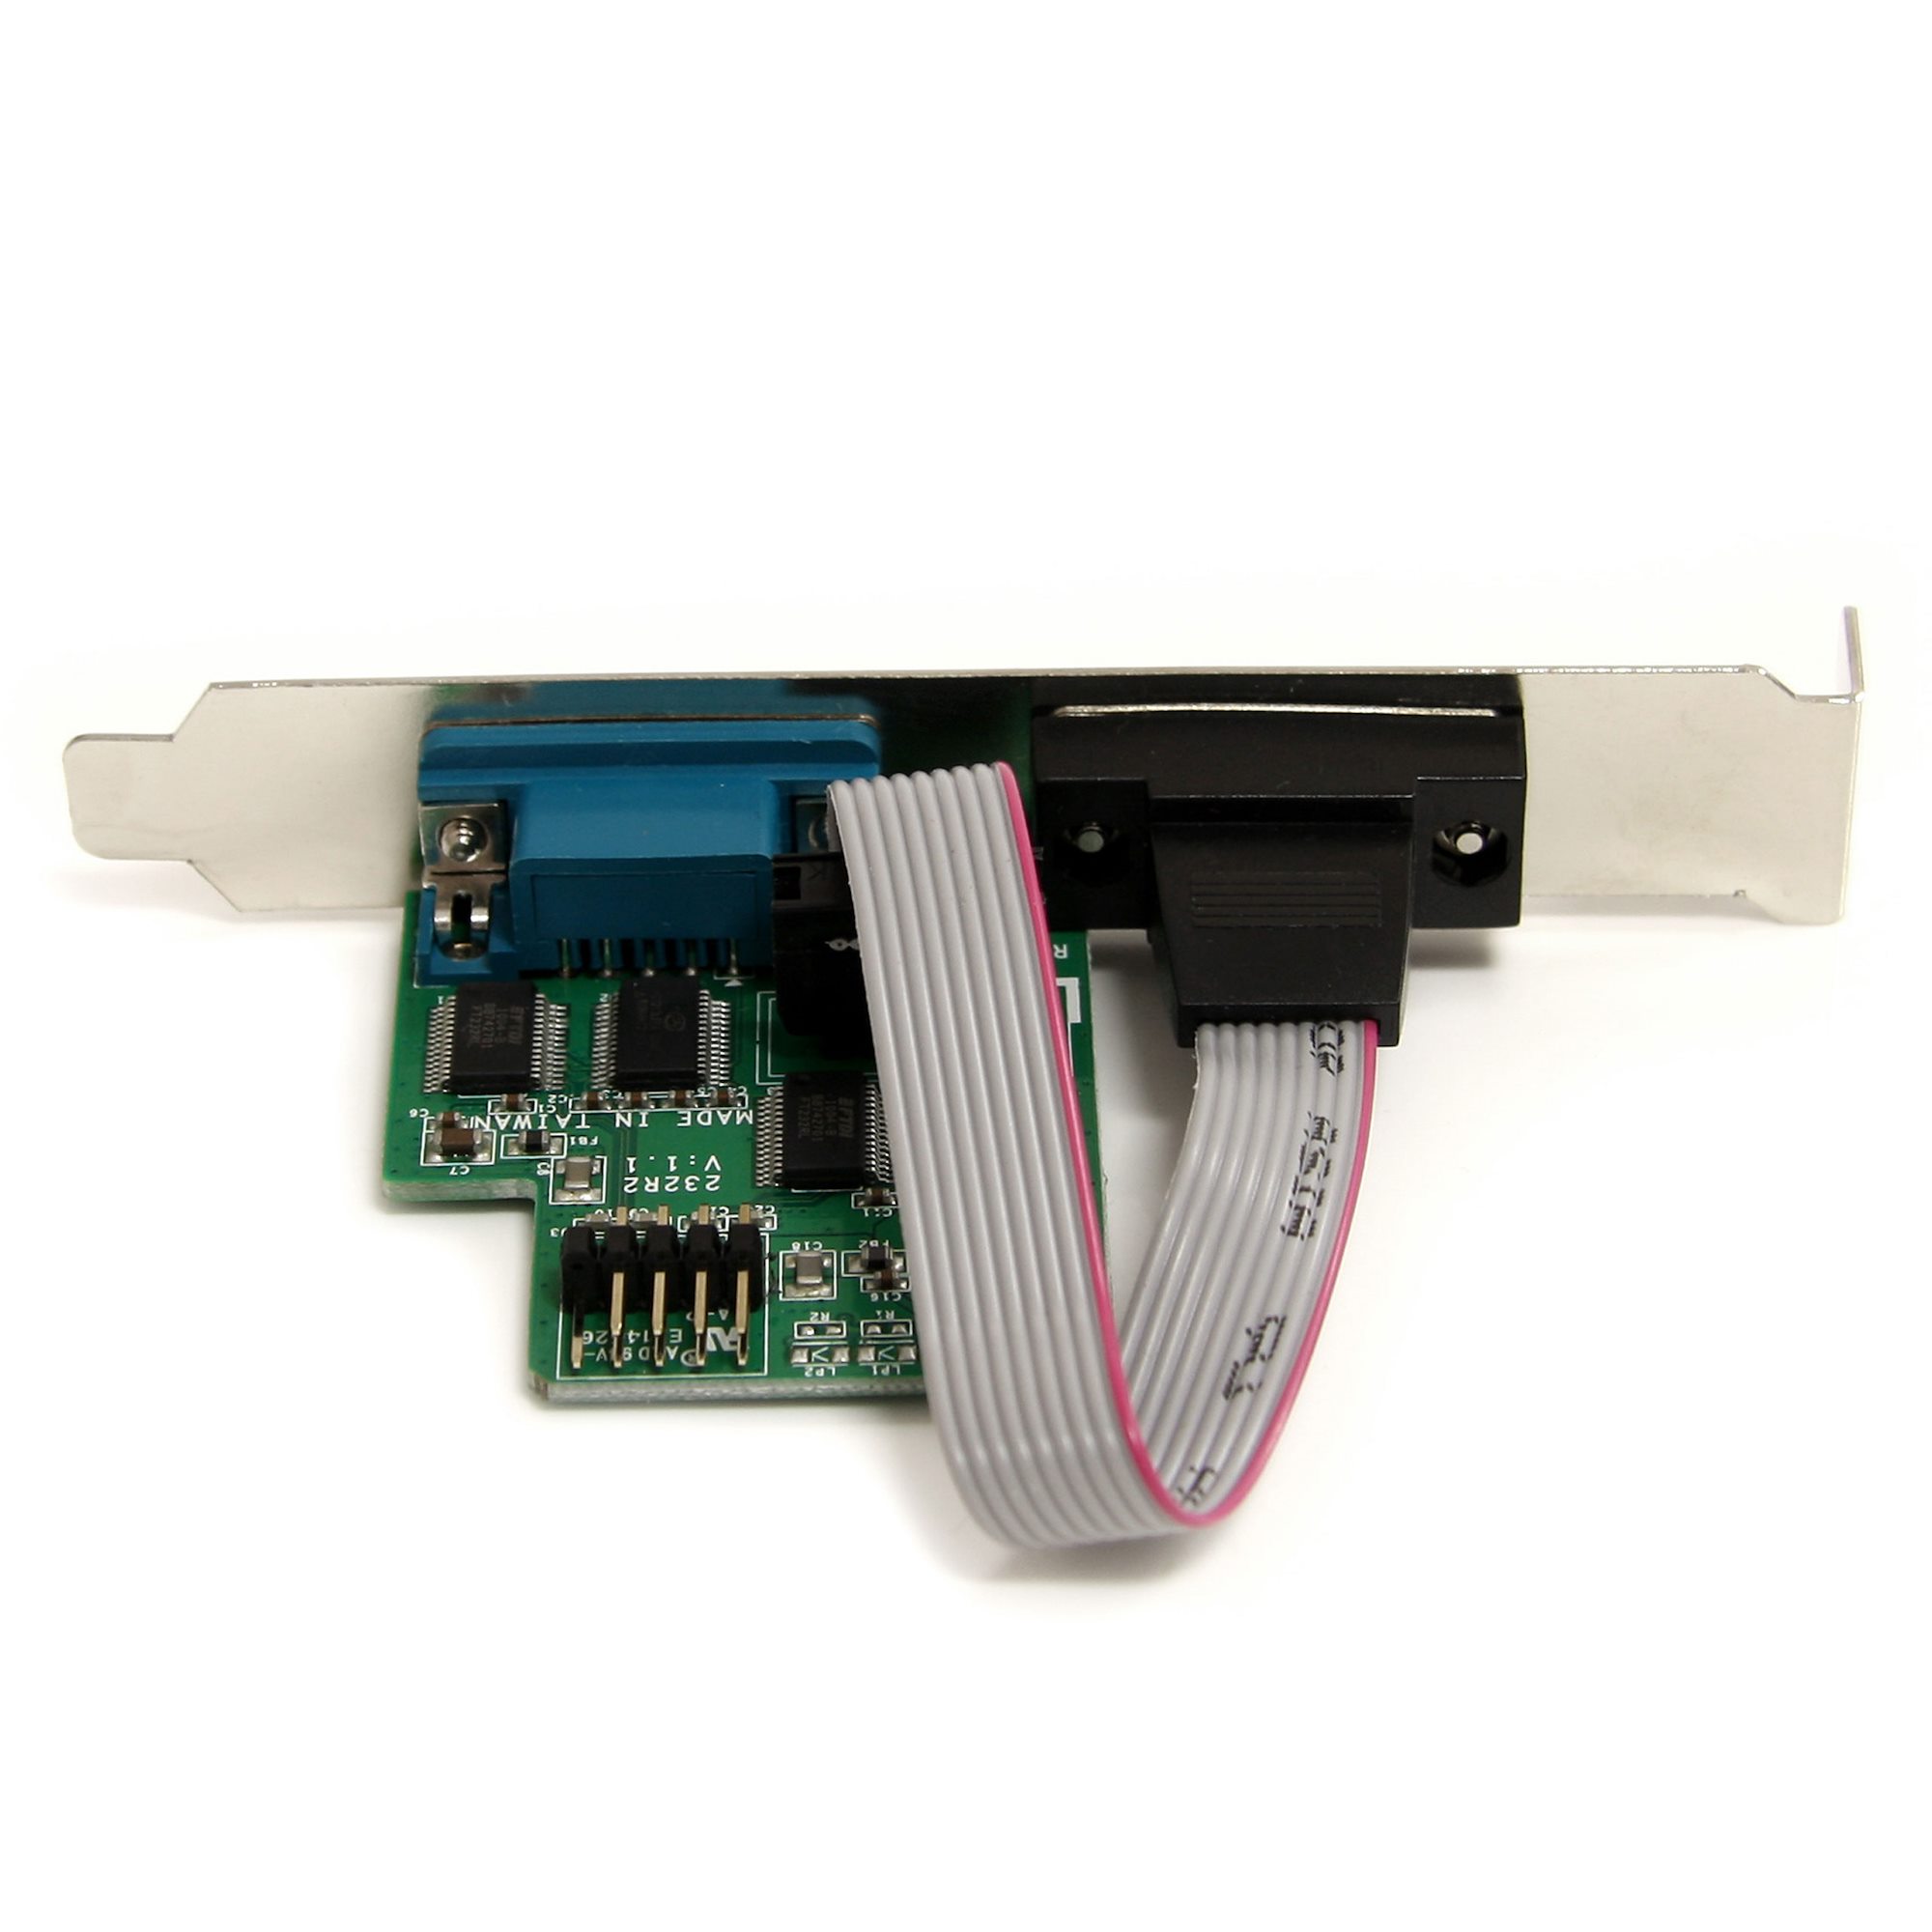 Internal port. Переходник USB-rs232. Rs232 материнская плата. 2 Port USB motherboard header Adapter.